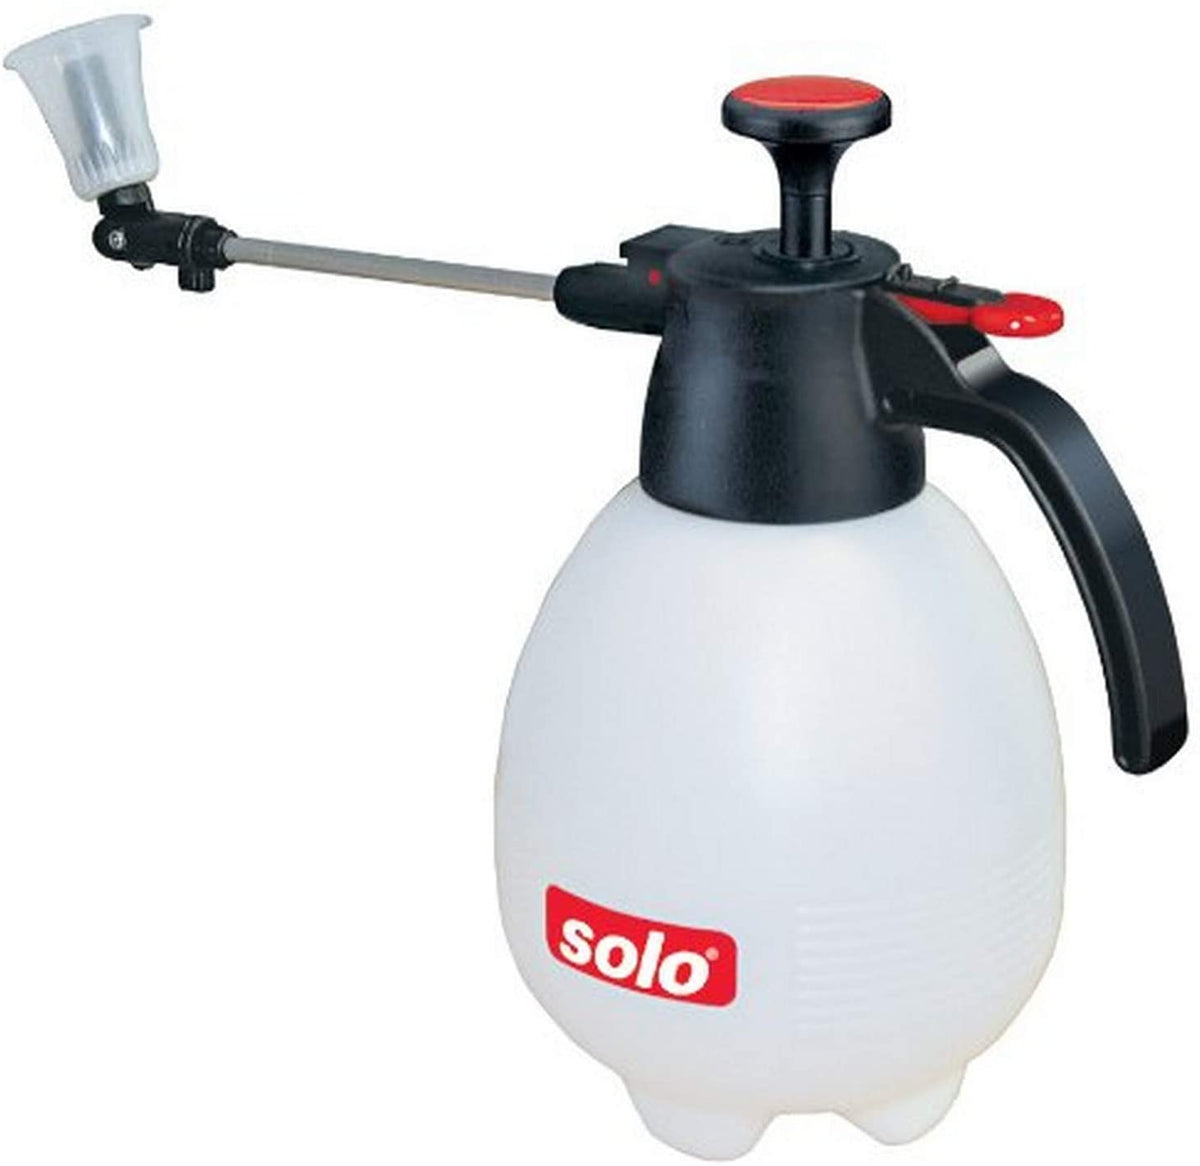 Solo Handheld Sprayer - 2 Liter